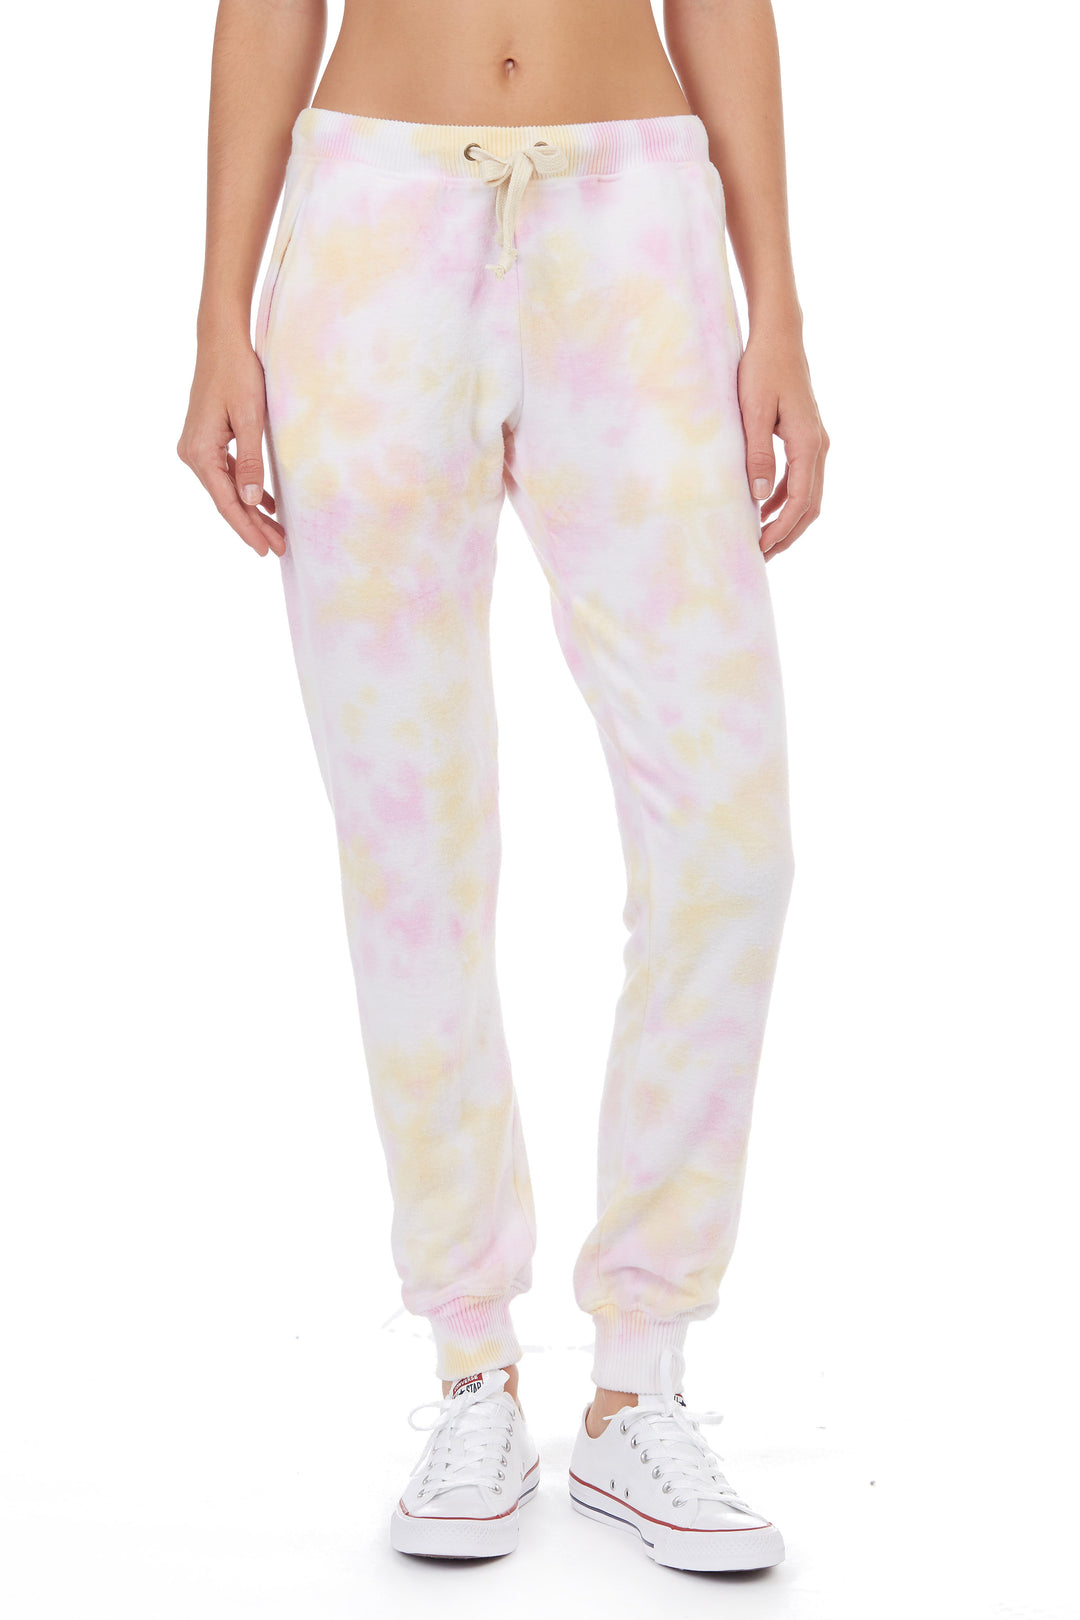 Rainbow Sherbert Tie Dye Sweatpants - Kingfisher Road - Online Boutique